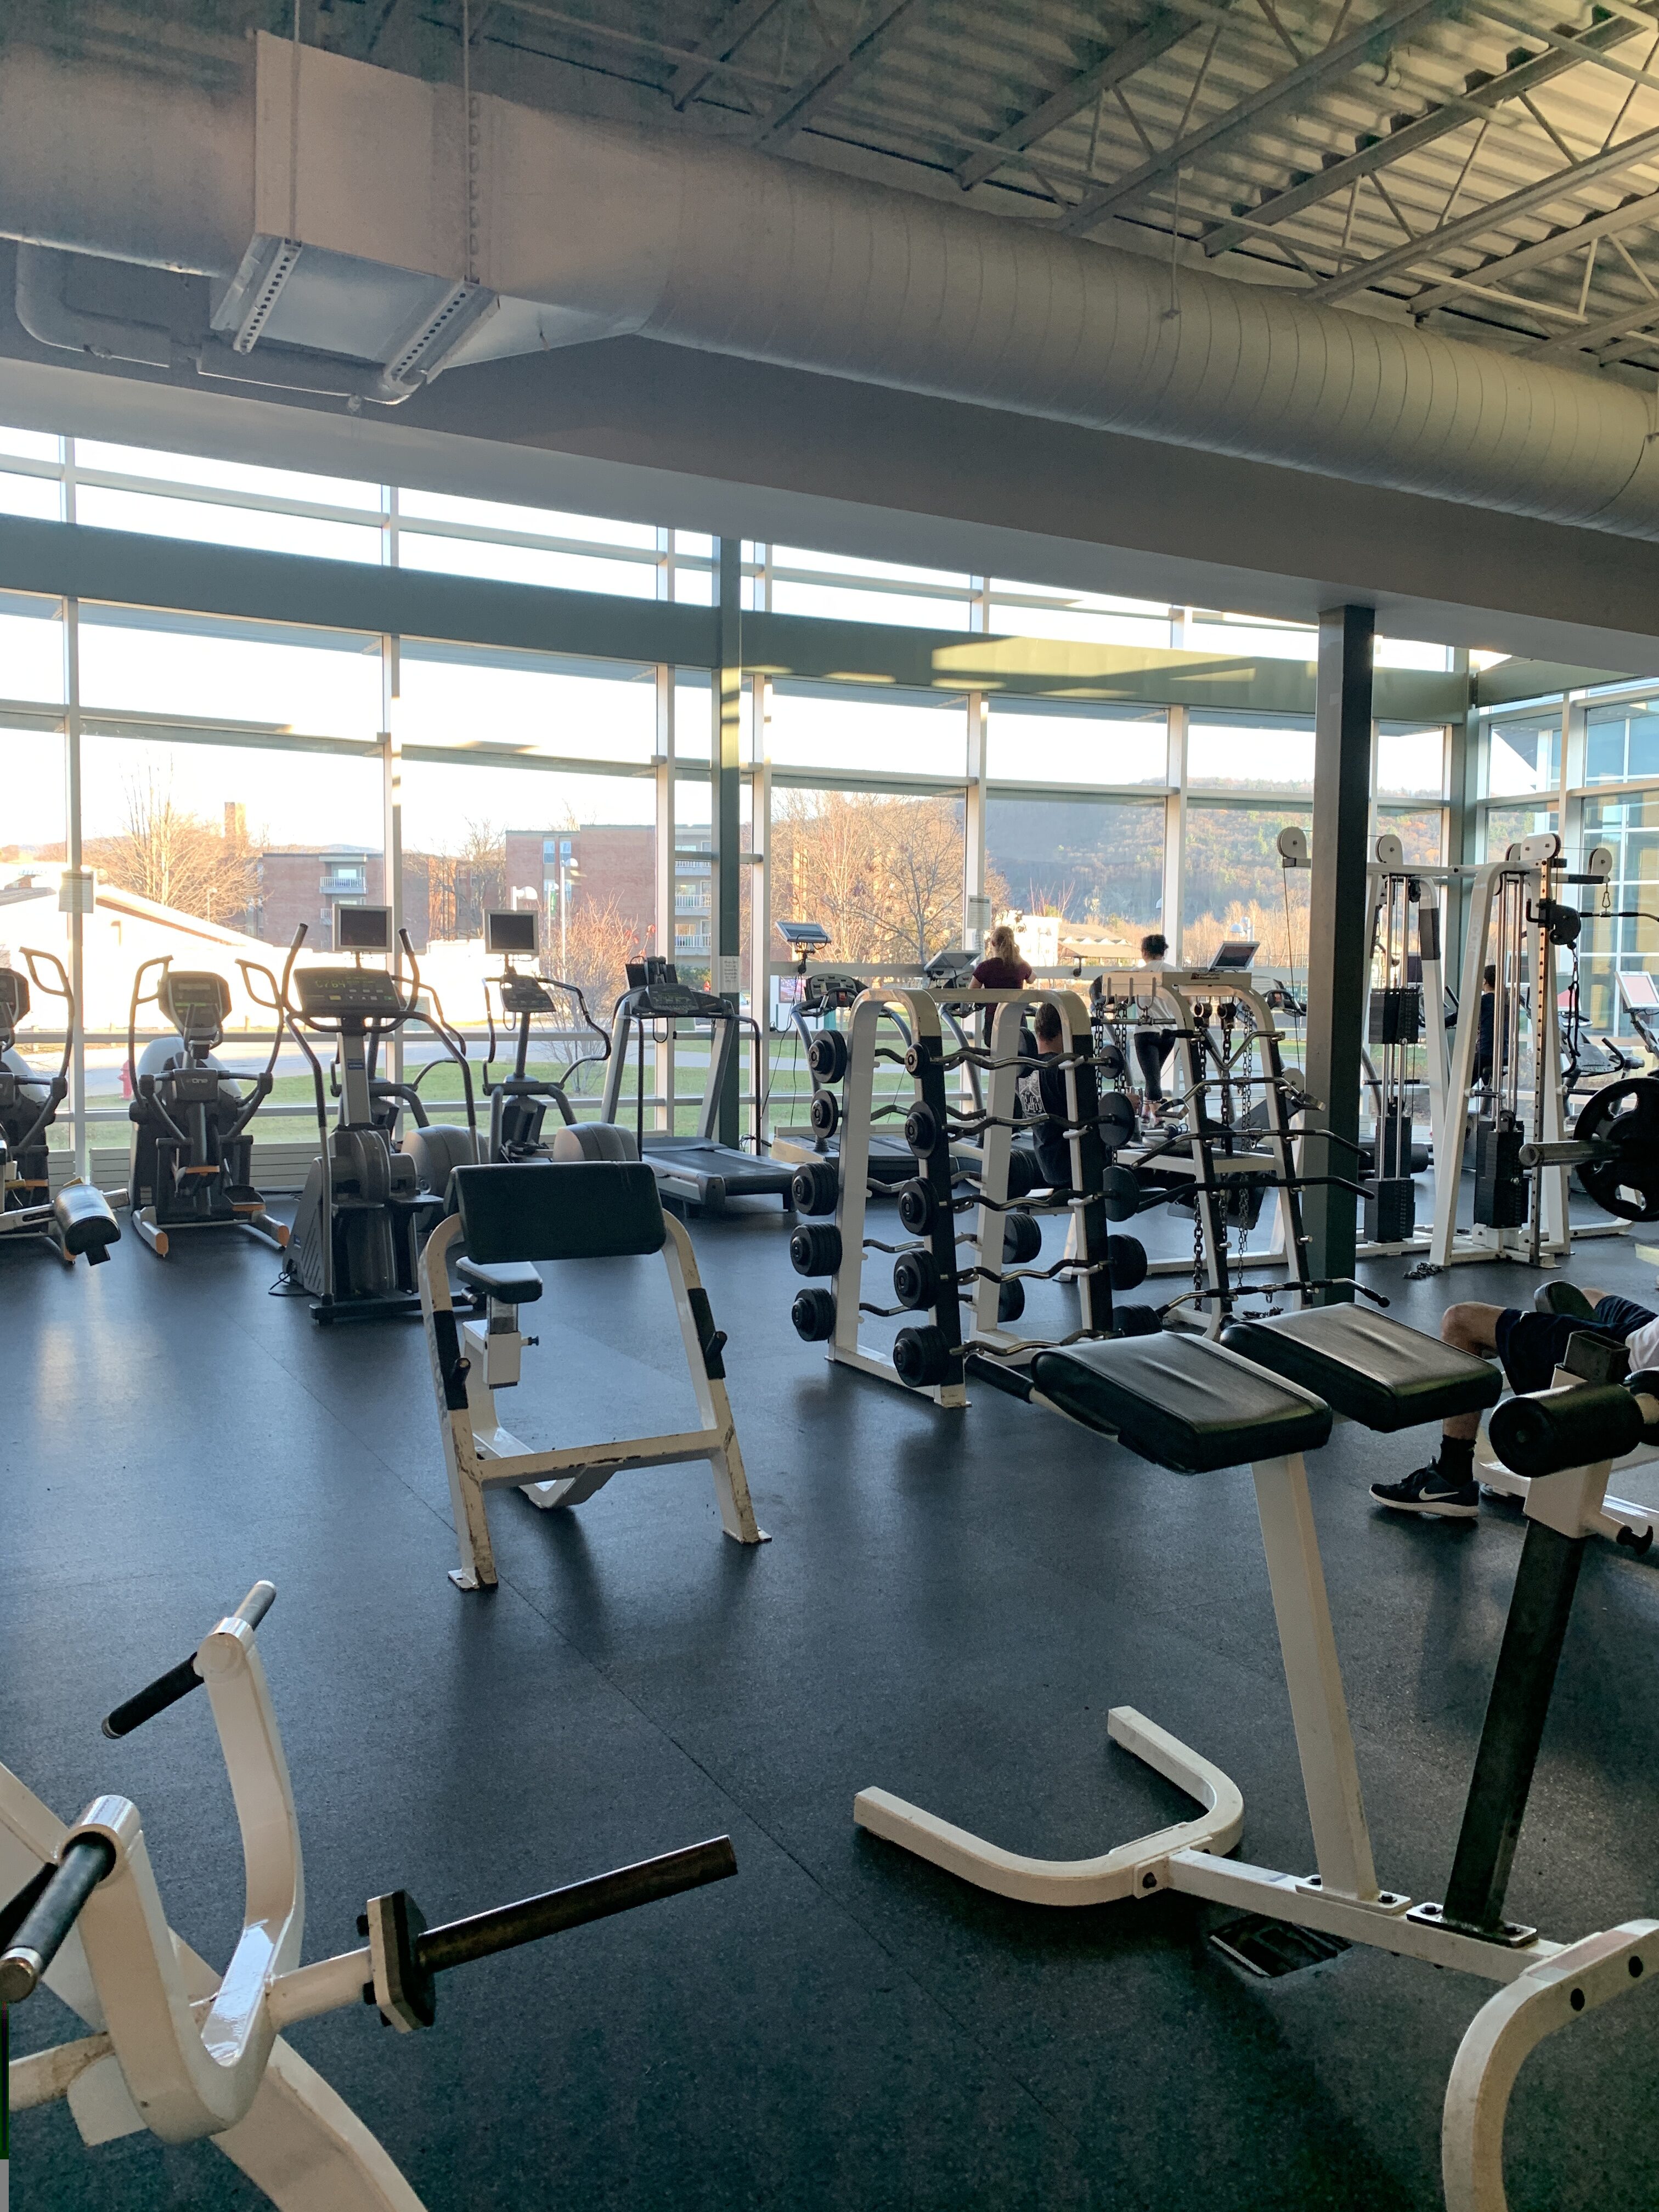 Students: fitness center needs serious improvement